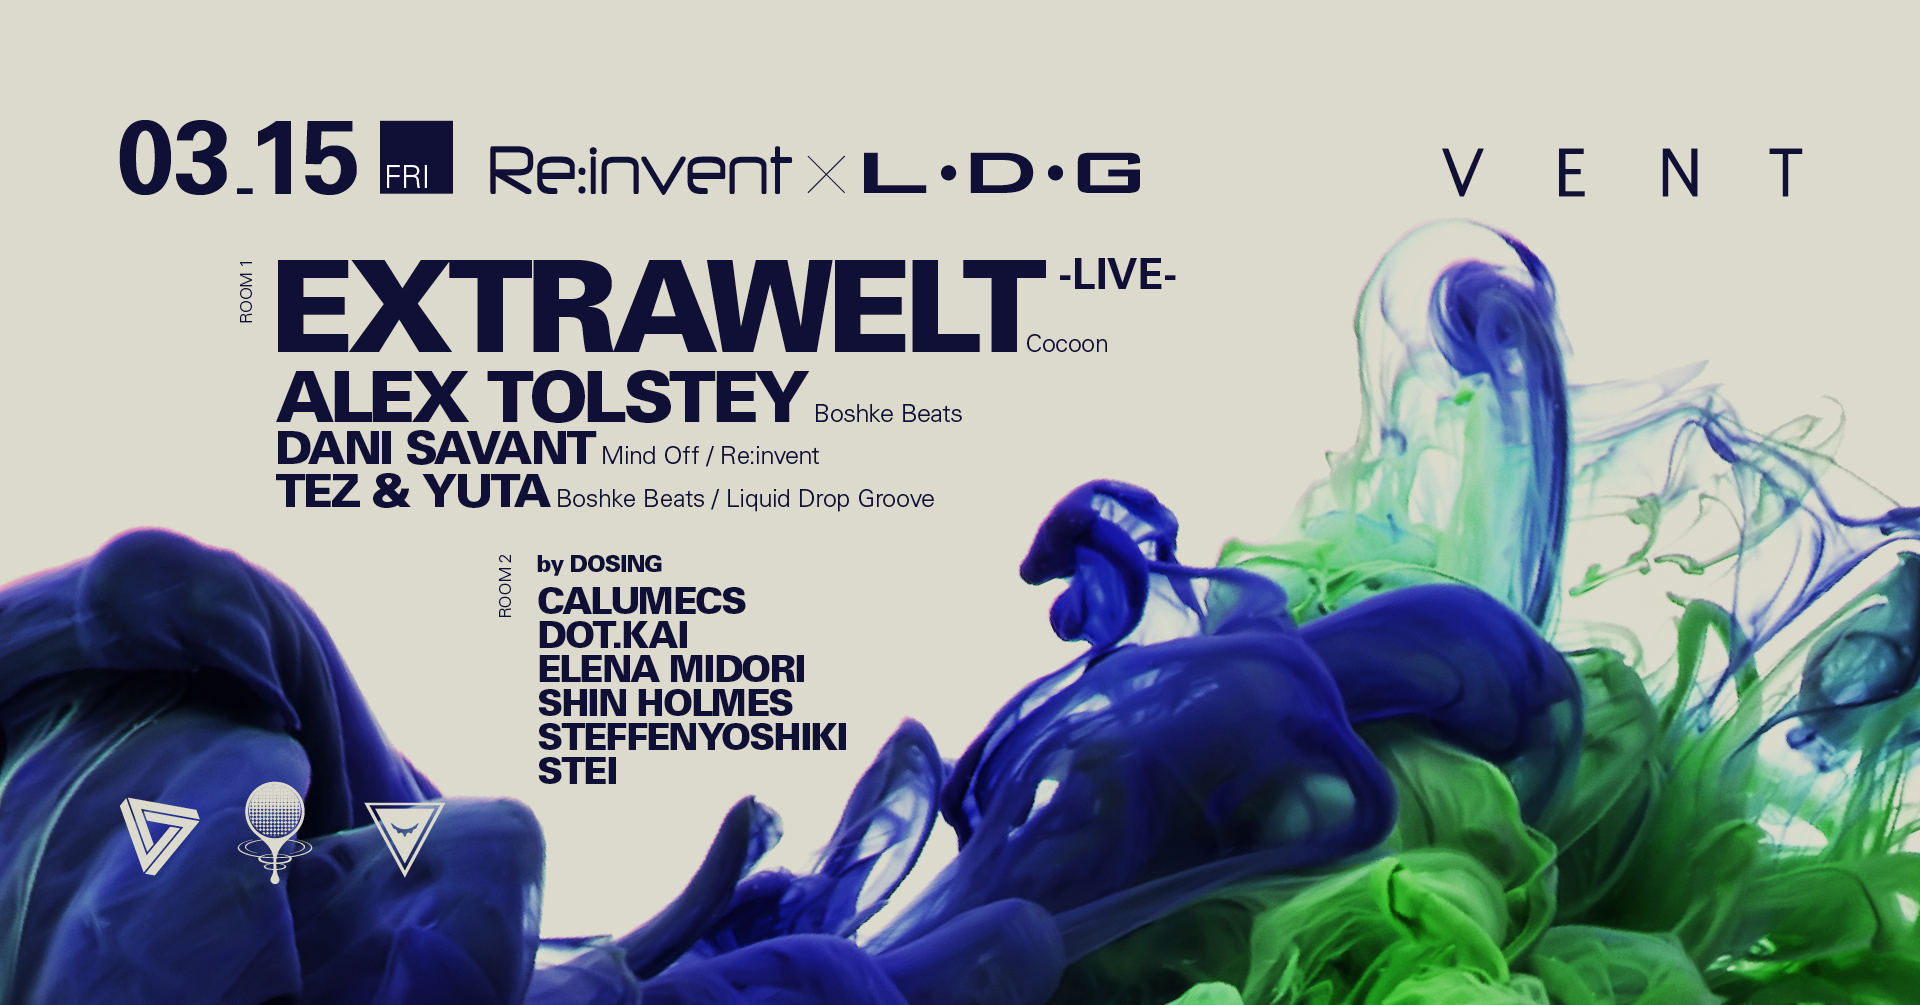 Extrawelt -live- at Re:invent × LDG